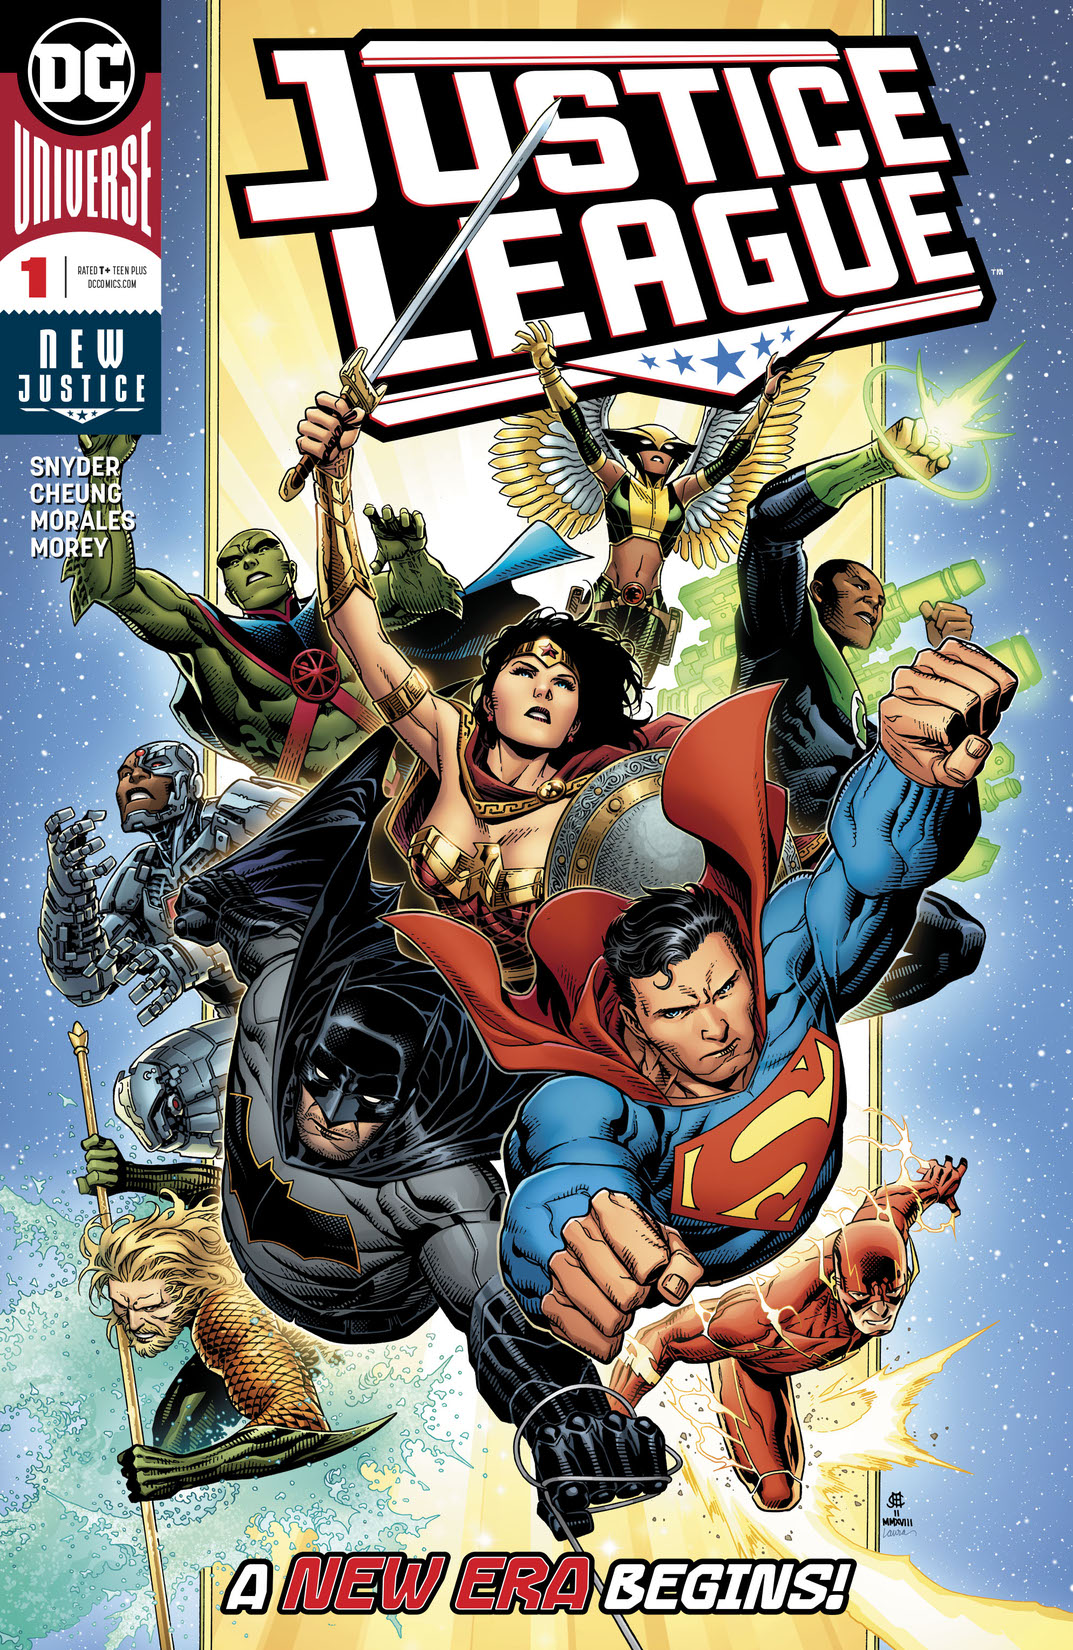 Justice League (2018-) #1 preview images